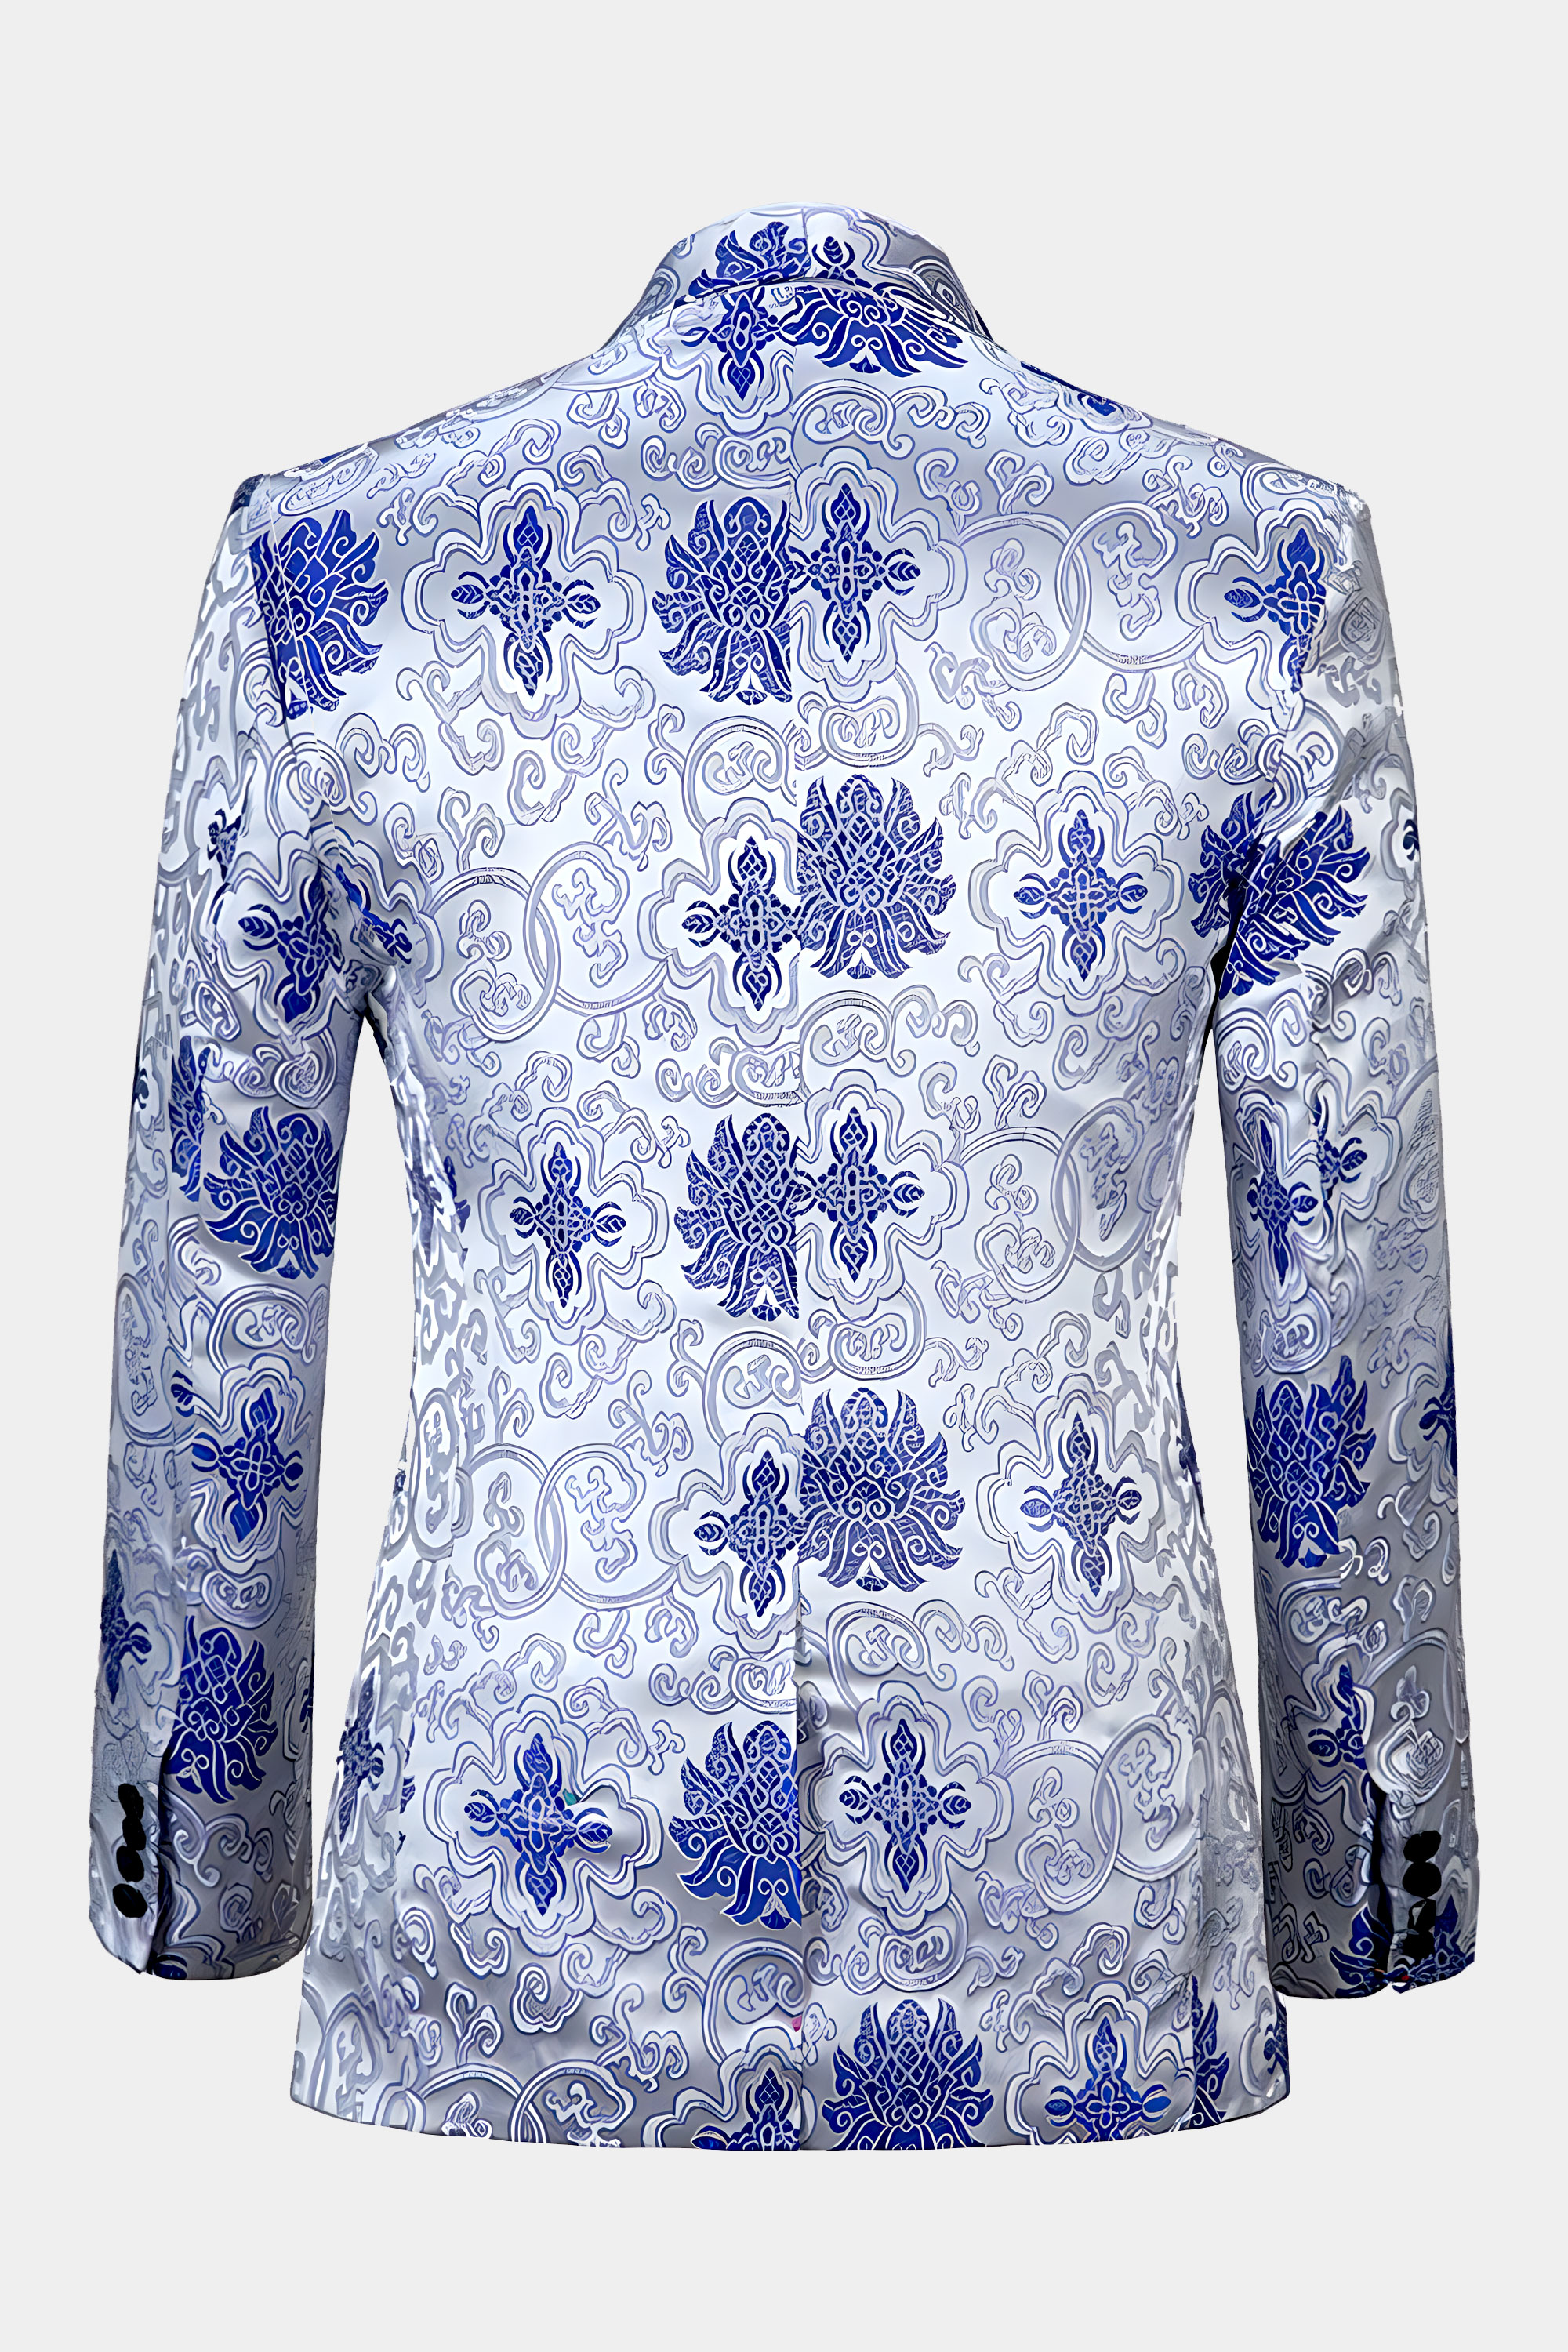 Royal-Blue-and-Silver-Tuxedo-Jacket-from-Gentlemansguru.com